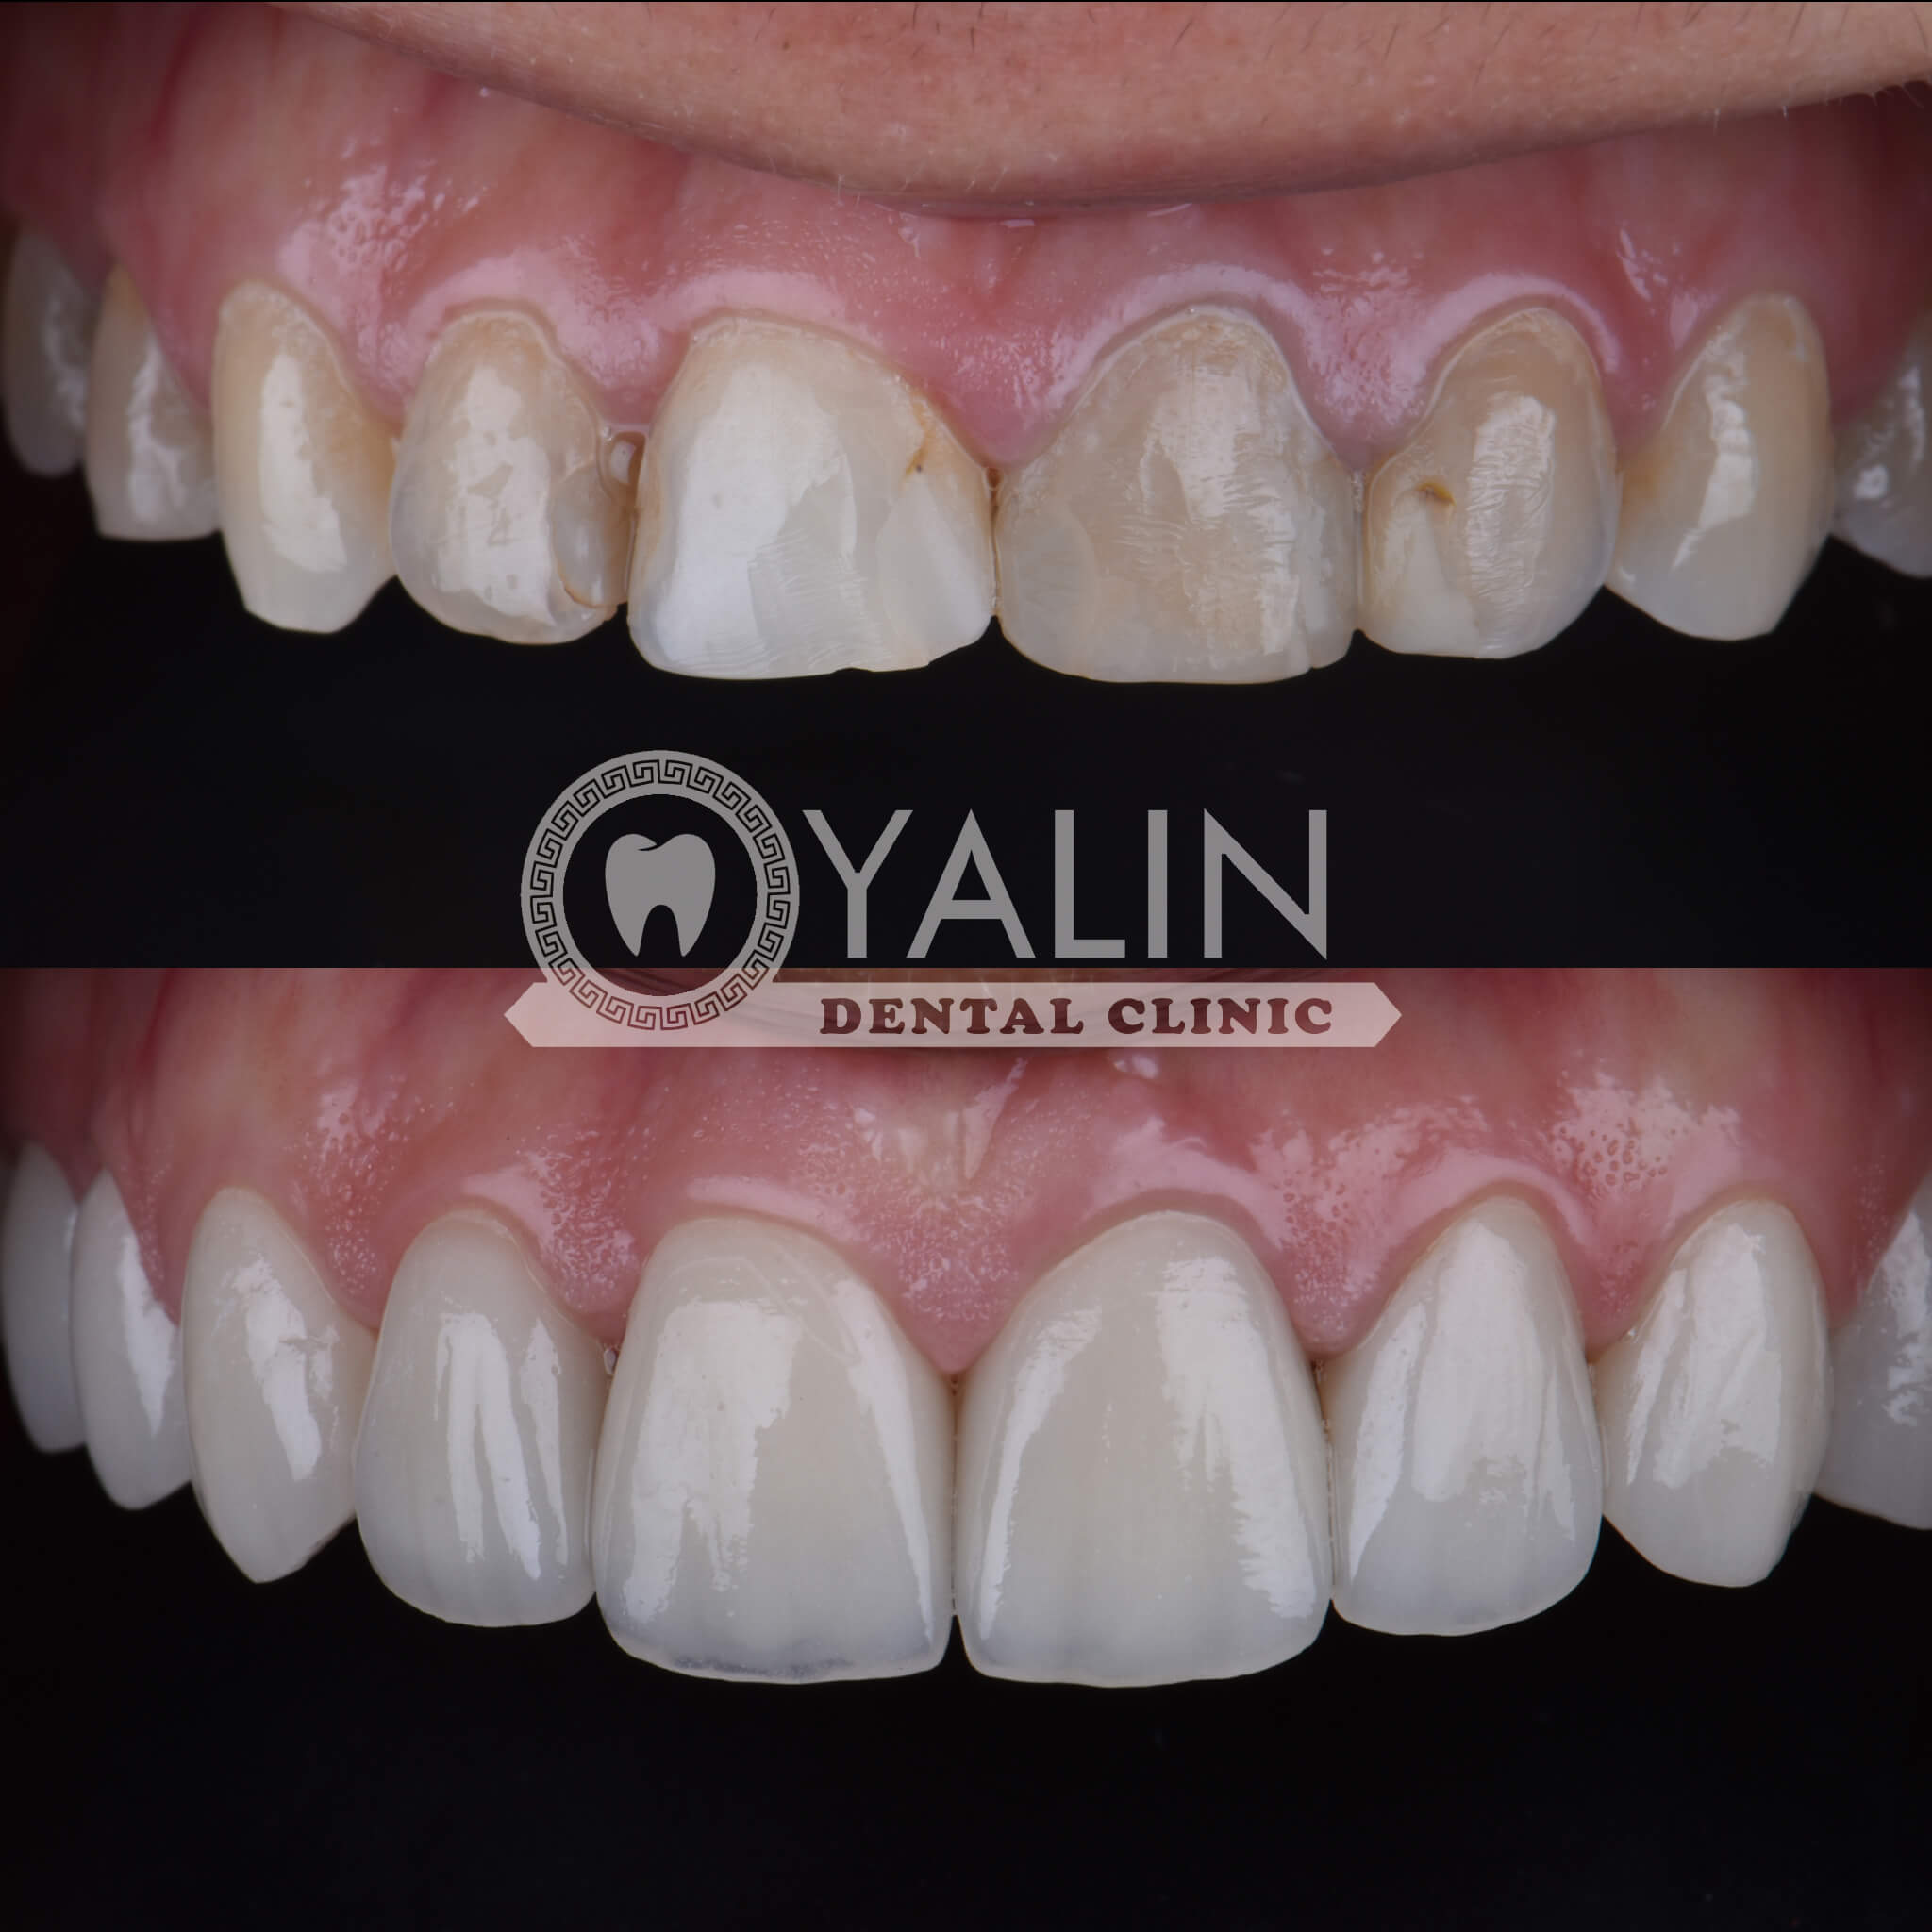 Ya Kont - Dental Clinic Antalya – FR - Yalın Dental Clinic